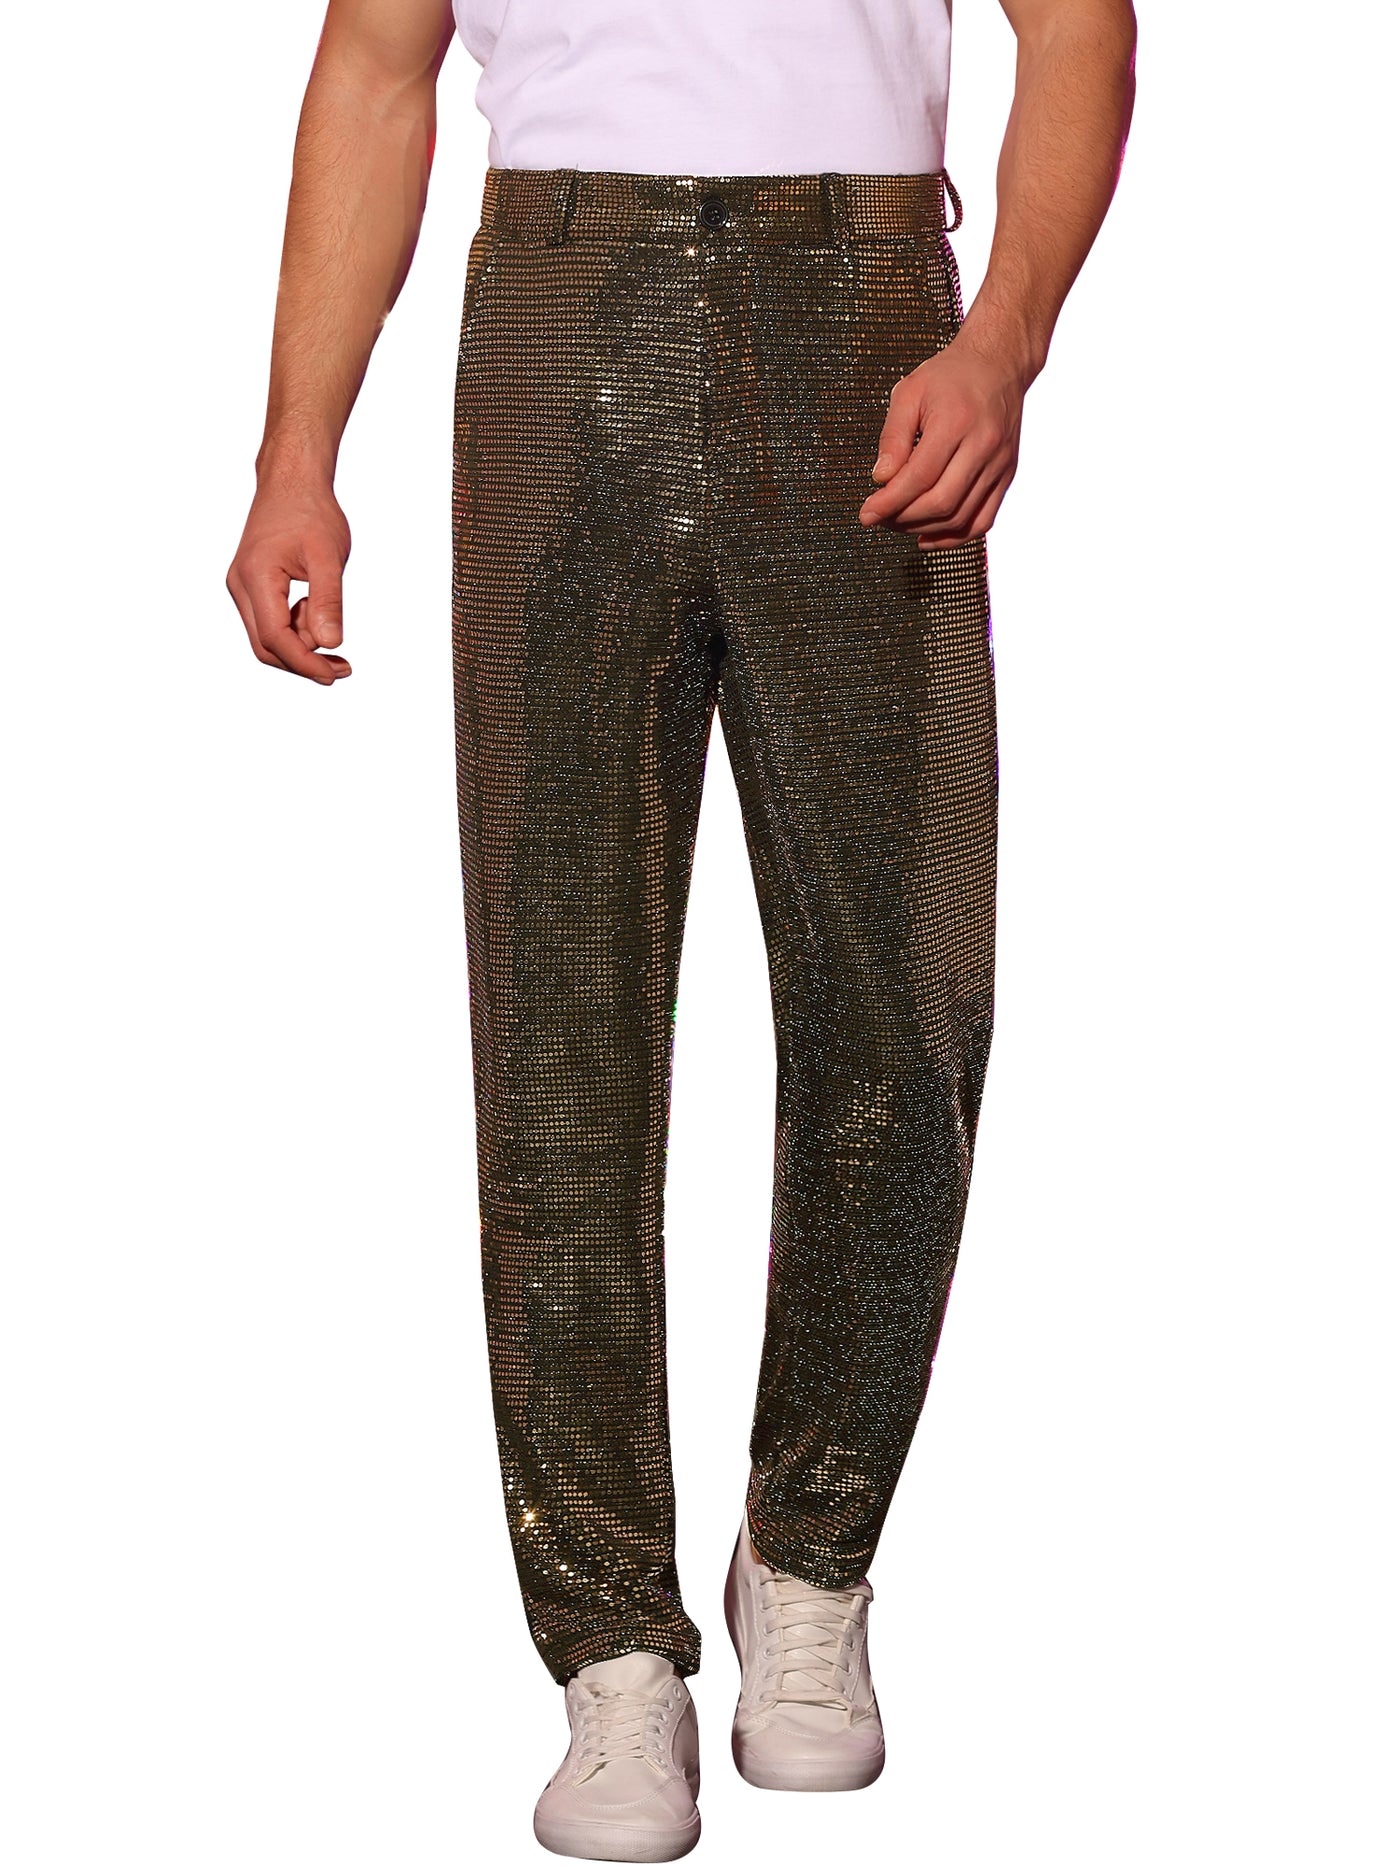 Bublédon Sequins Pants for Men's Party Disco Shiny Sparkly Straight Leg Trousers